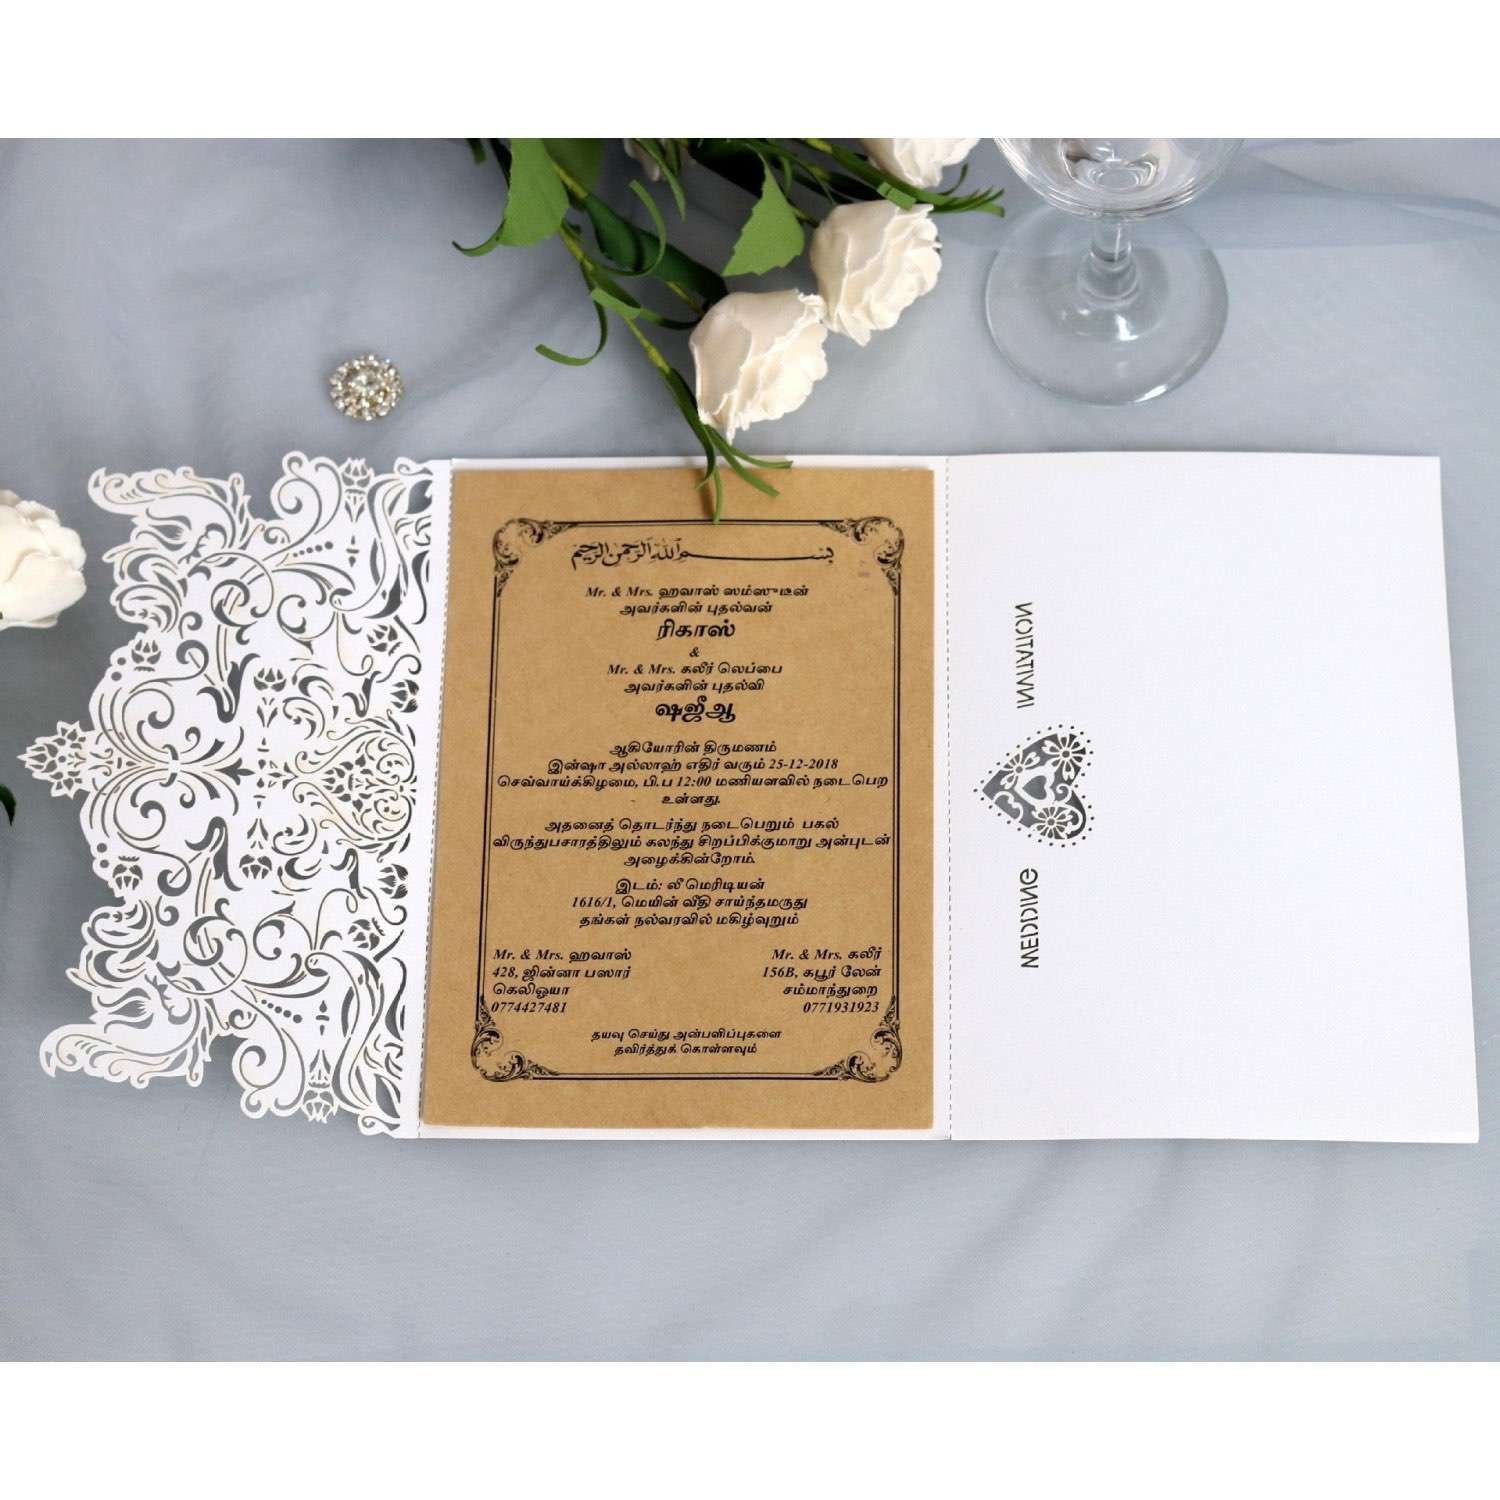 White Greeting Card Wholesale Wedding Invitation Card Heart-shaped